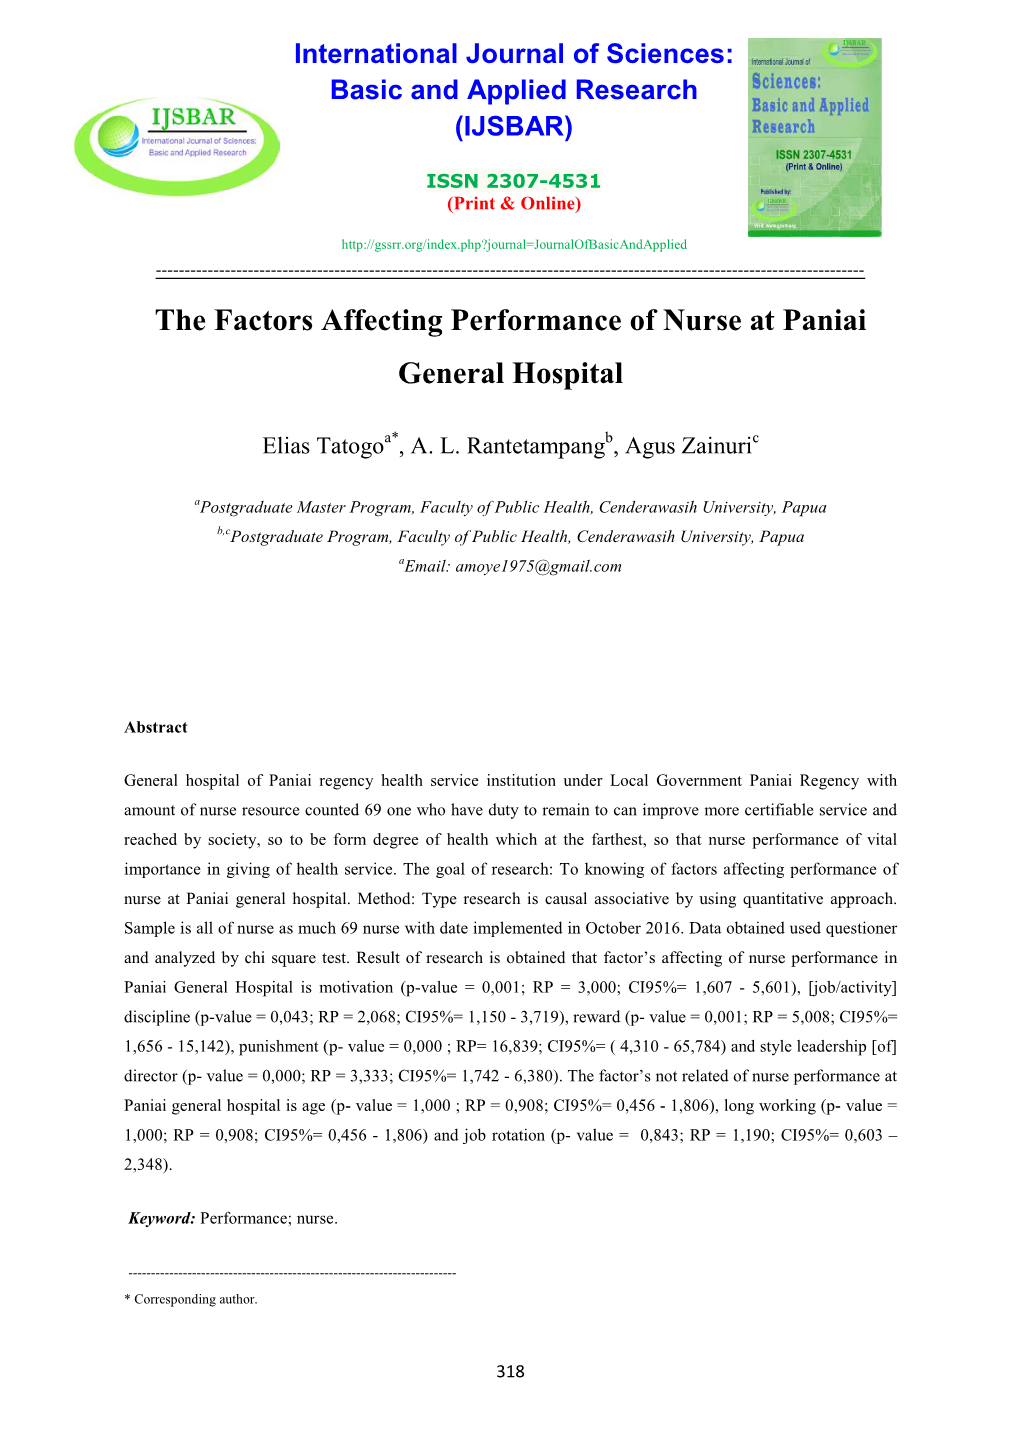 The Factors Affecting Performance of Nurse at Paniai General Hospital